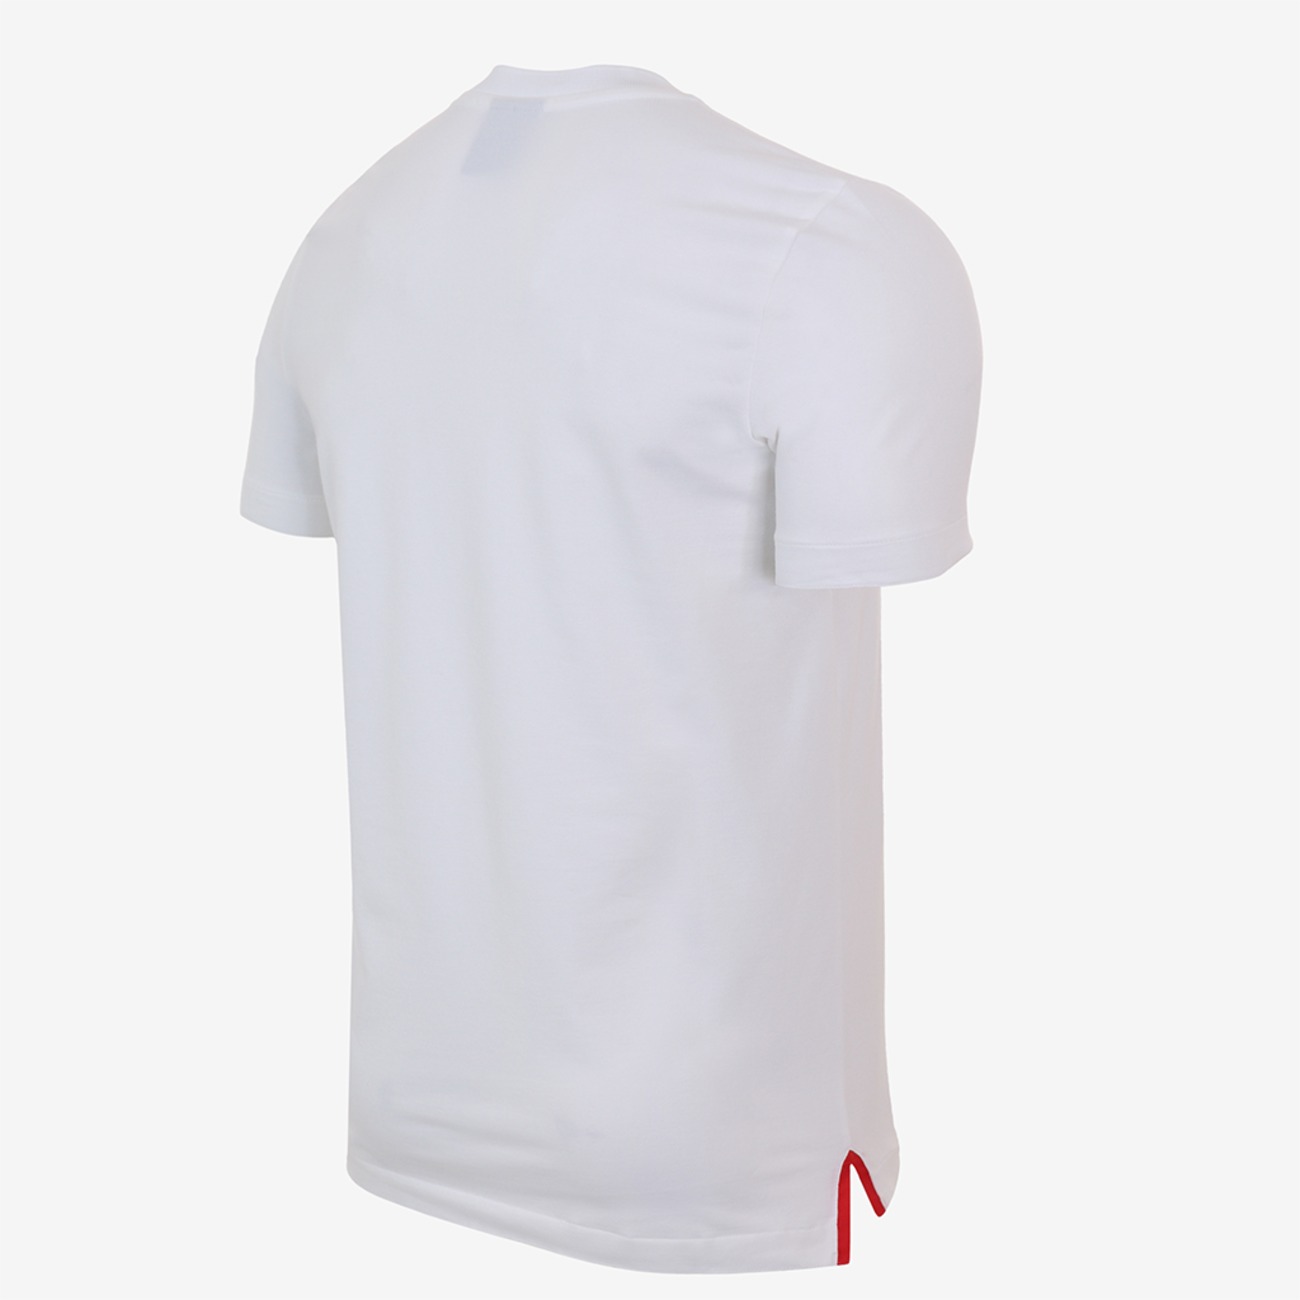 Camisa Polo Nike Sportswear Corinthians Masculina - Foto 2